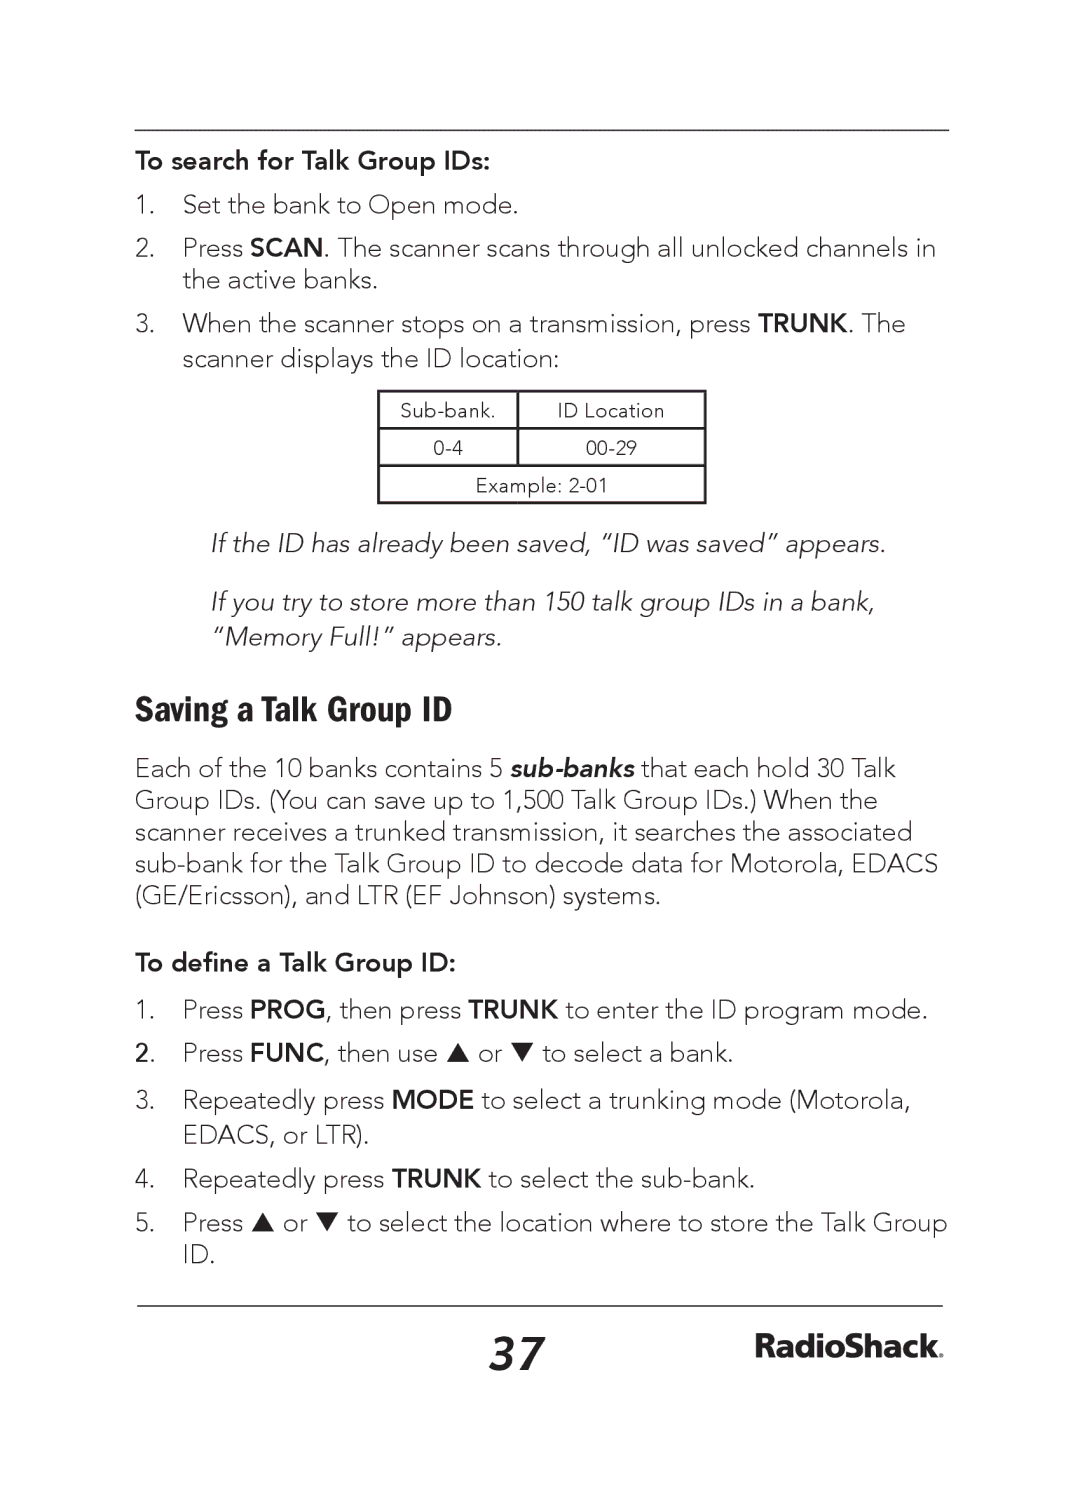 Radio Shack 20-163 manual Saving a Talk Group ID, To search for Talk Group IDs, To define a Talk Group ID 